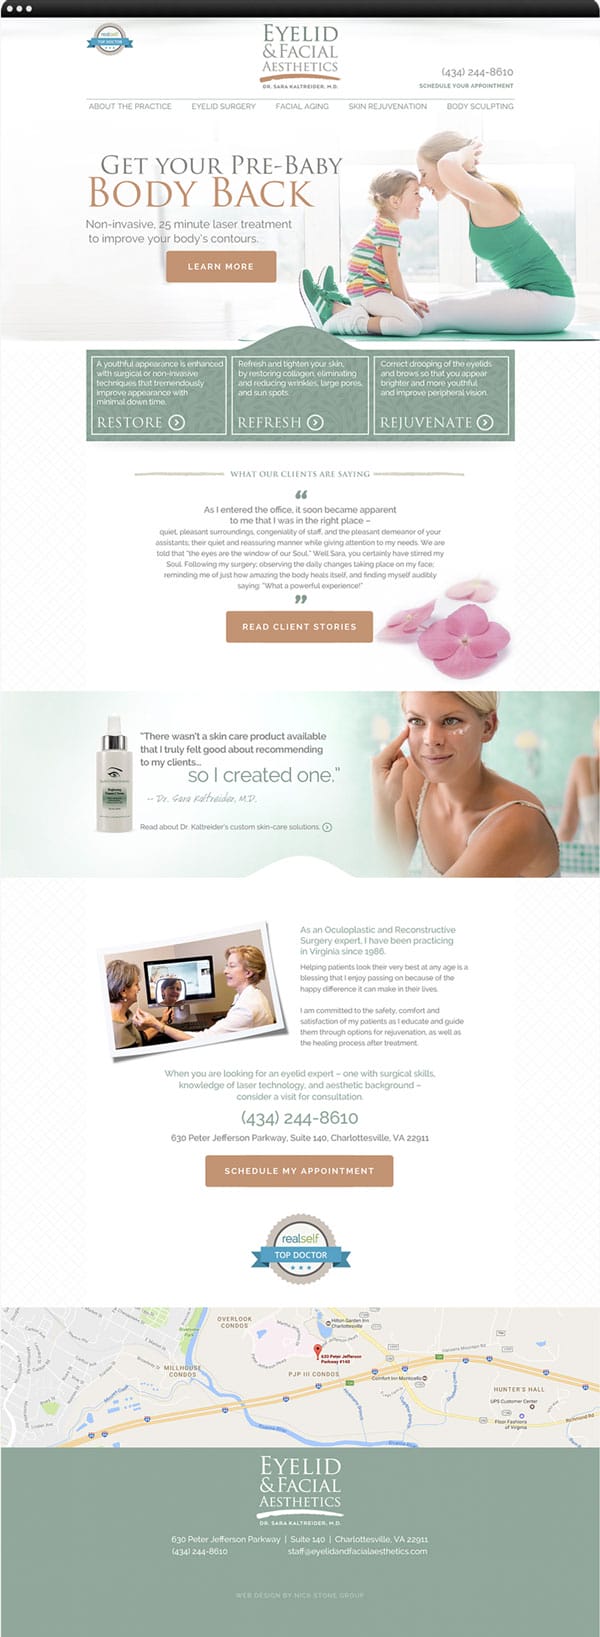 web design portfolio: Eyelid & Facial Aesthetics